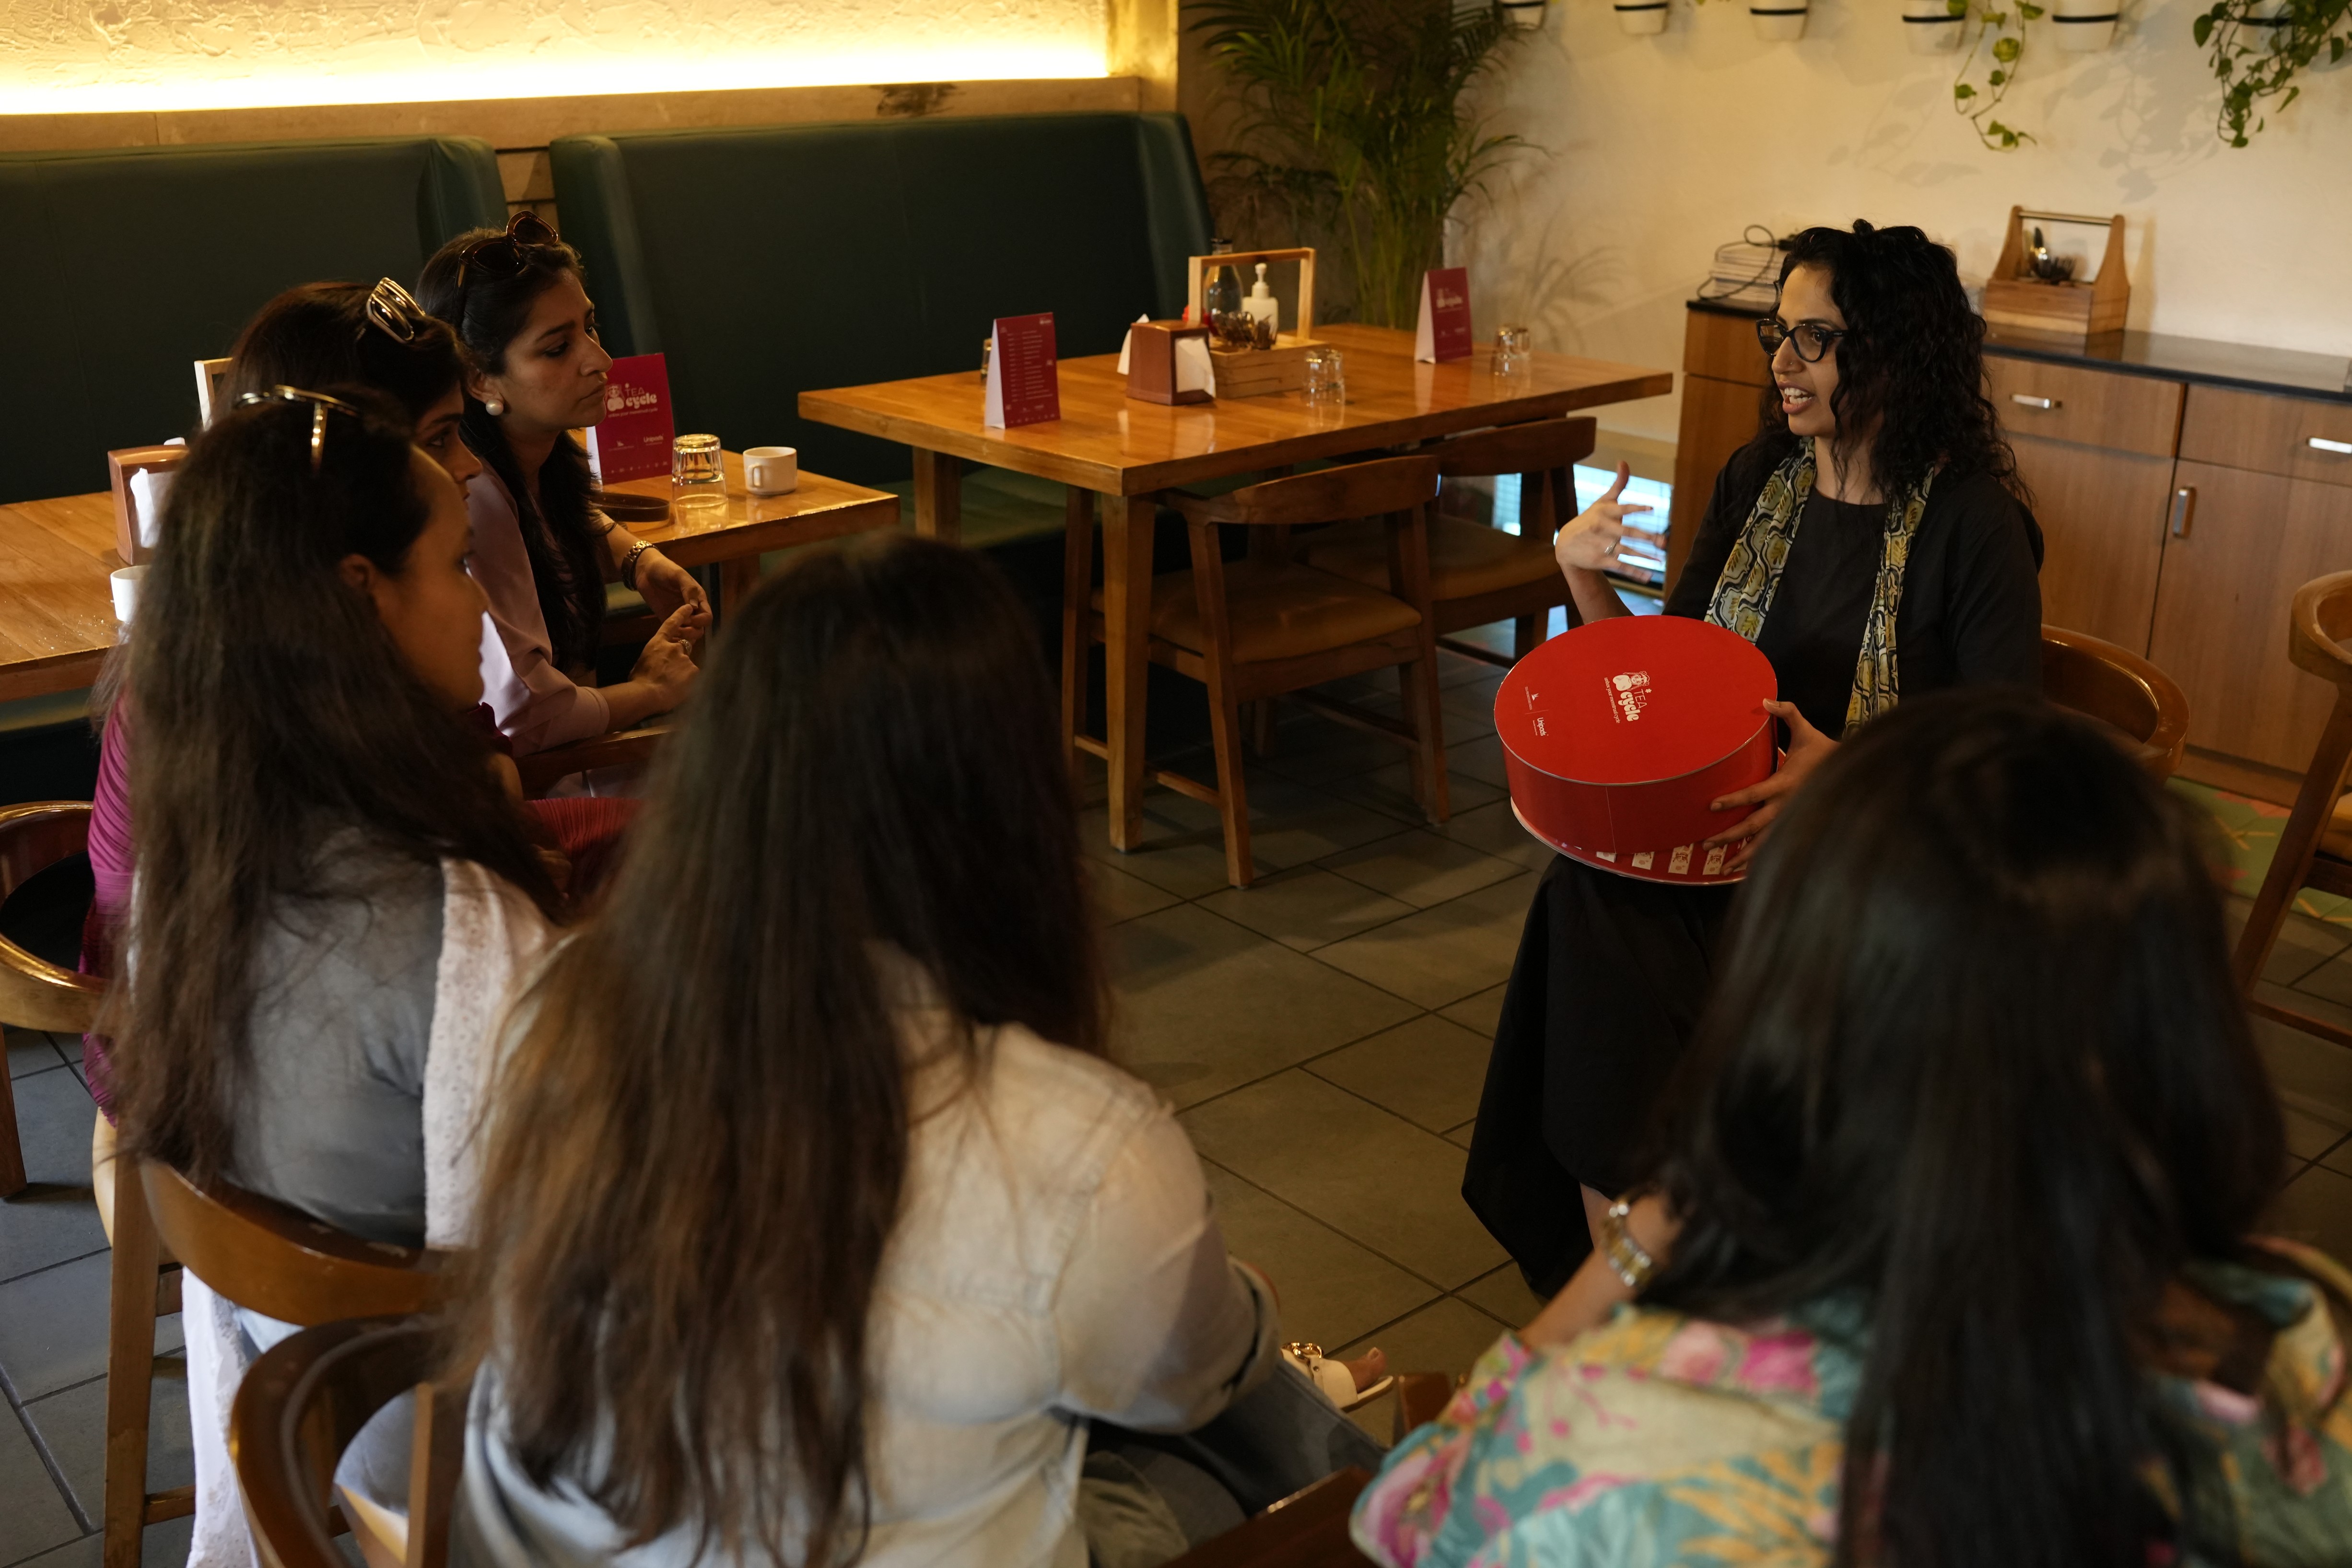 Unipads launches unique tea cycle calendar to raise awareness around menstruation